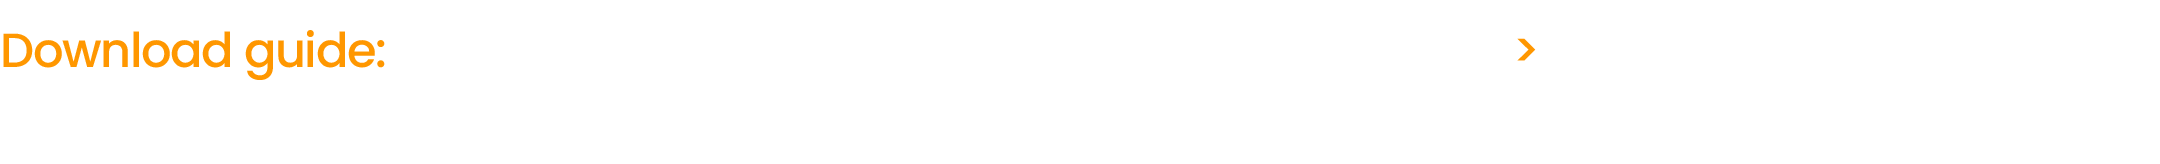 RevOps Data Automation Platform buyer's guide